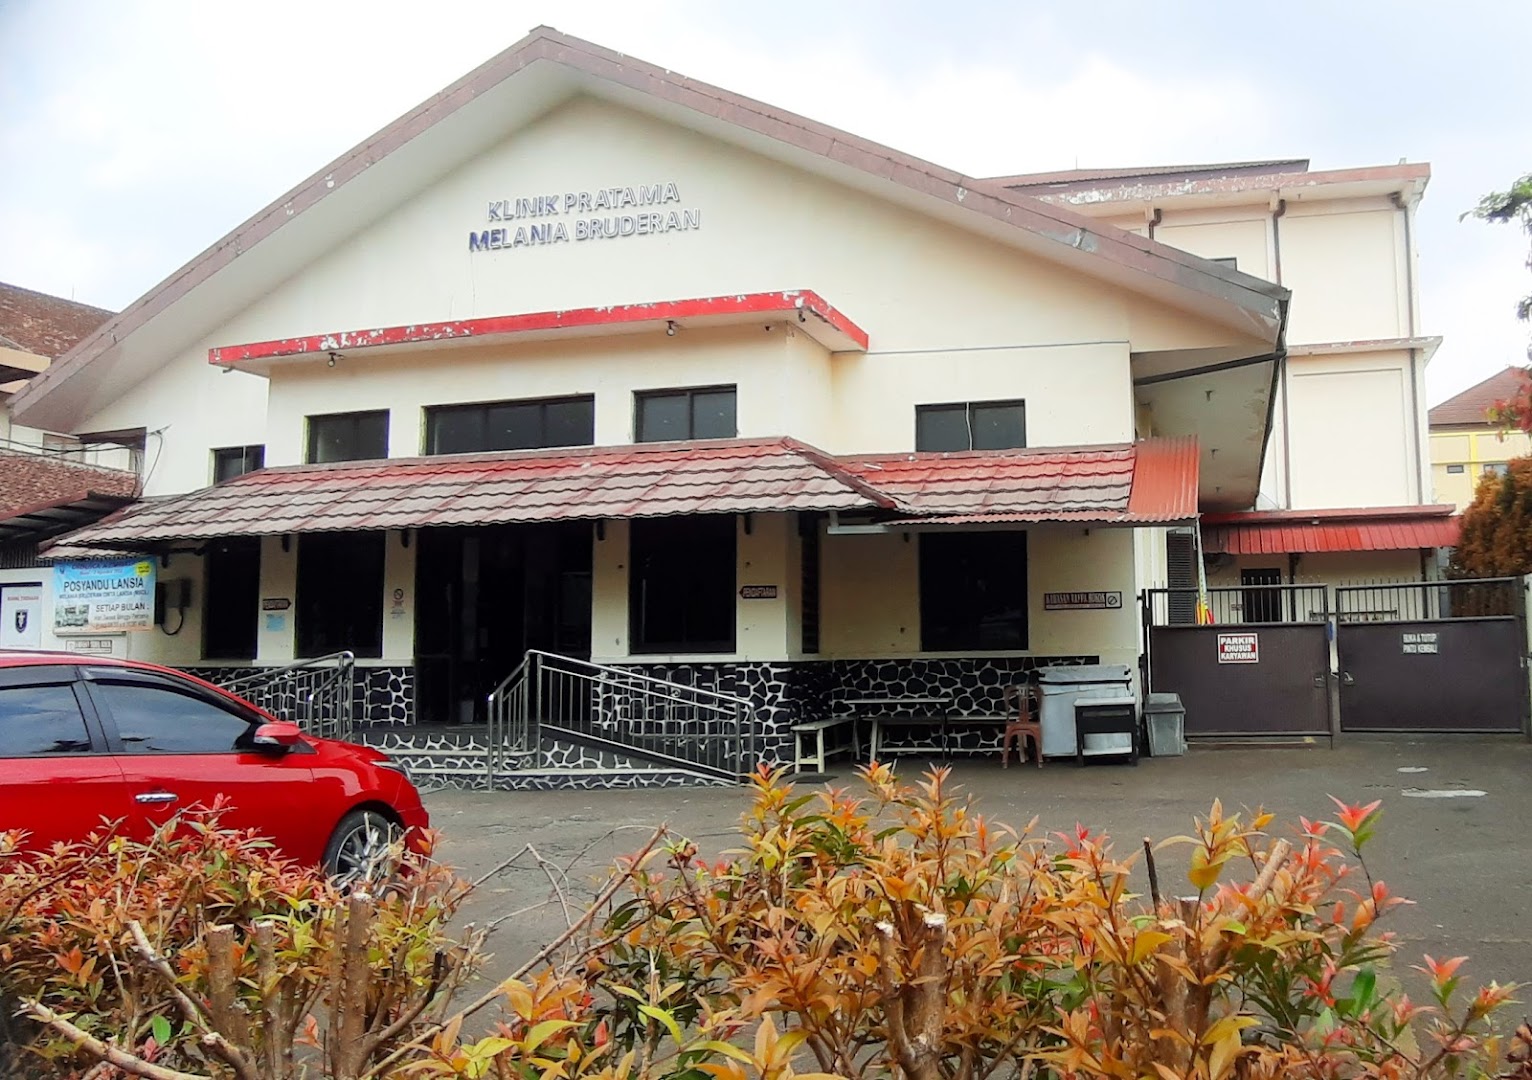 Klinik Pratama Melania Bruderan Photo